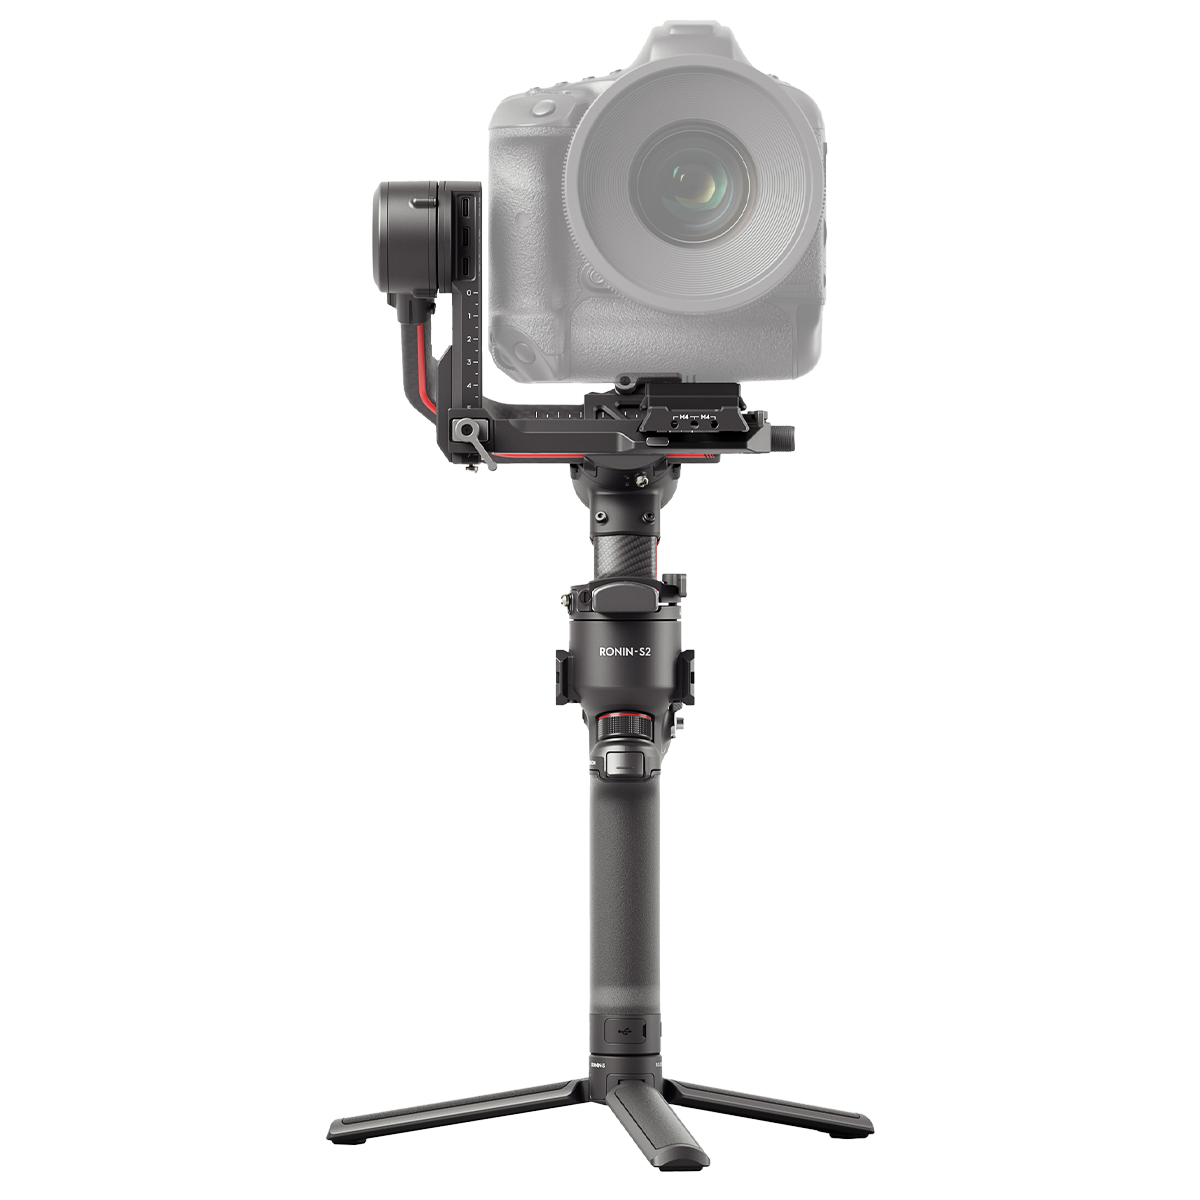 DJI RS 2 Handheld Gimbal Stabilizer for DSLR and Cinema Cameras